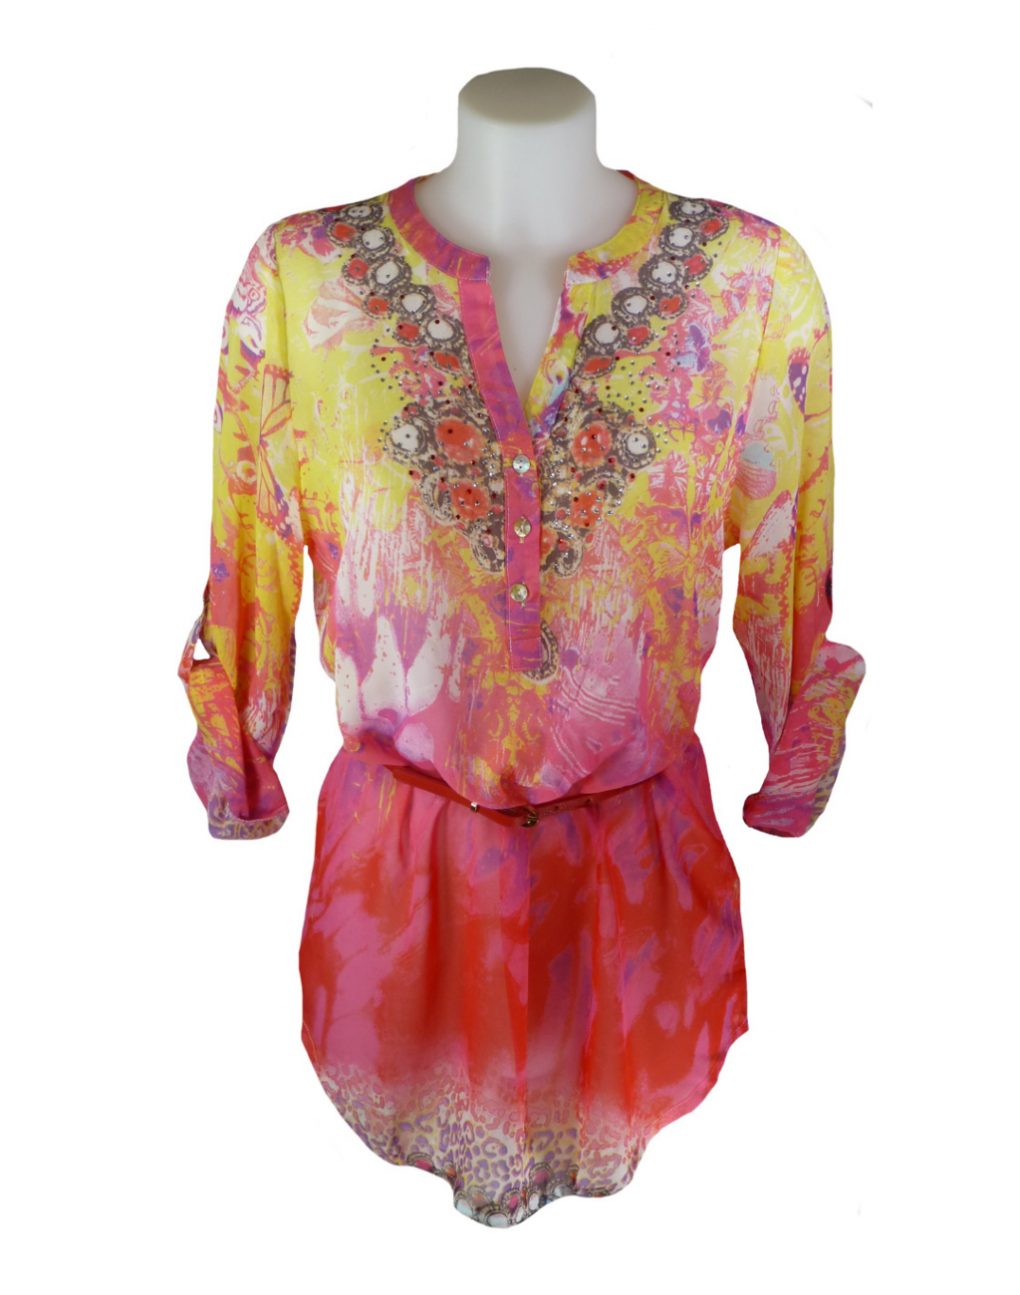 JayLey Orange and White Silk Devore Kimono - Fashion Fix Online